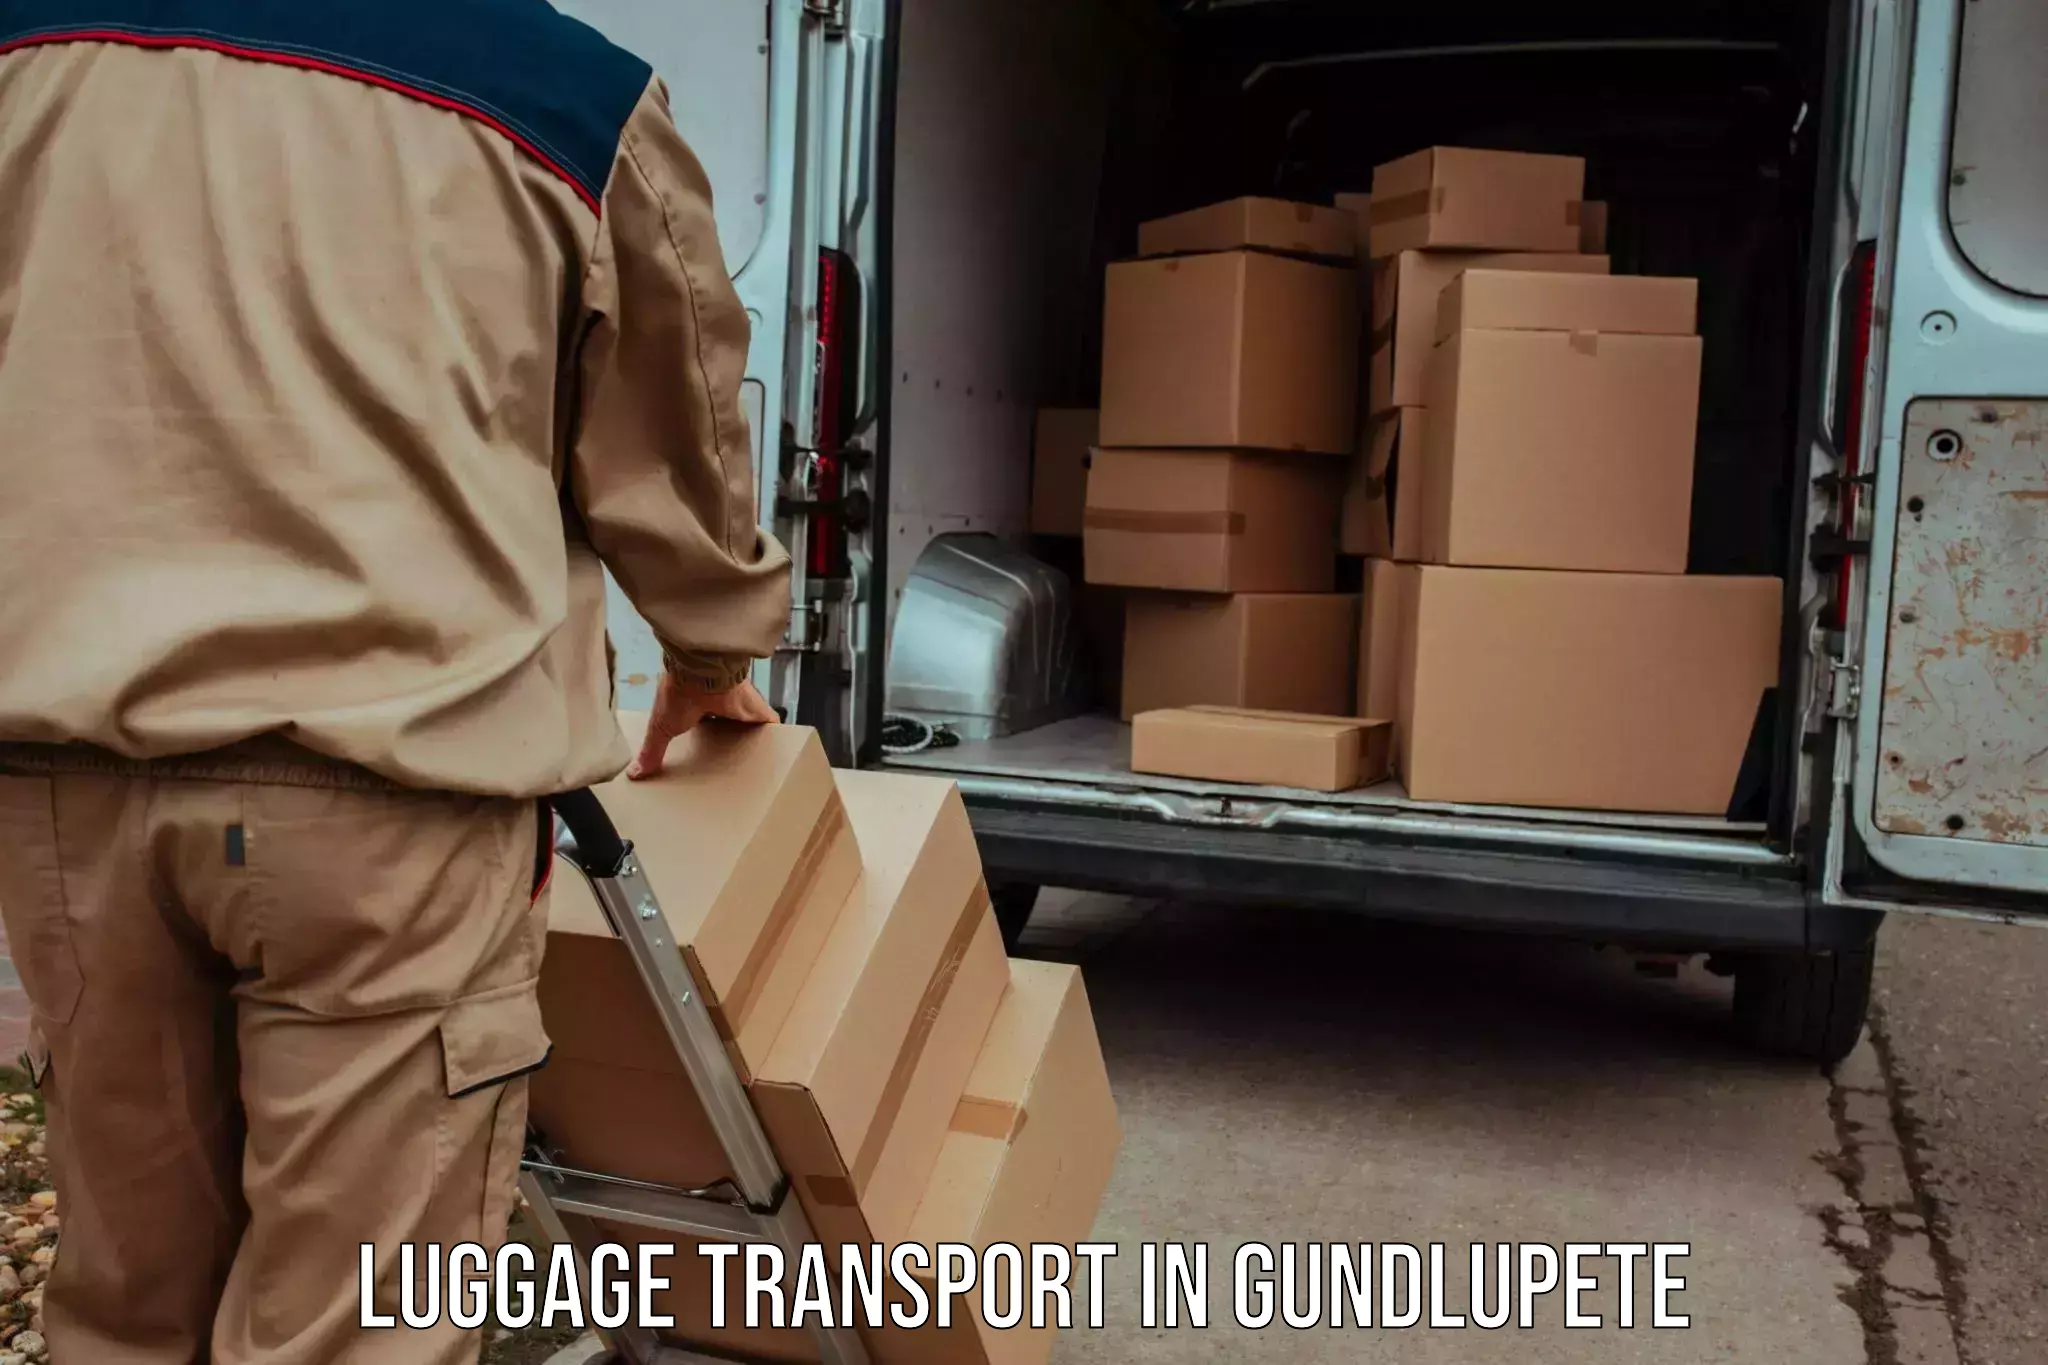 Urban luggage shipping in Gundlupete